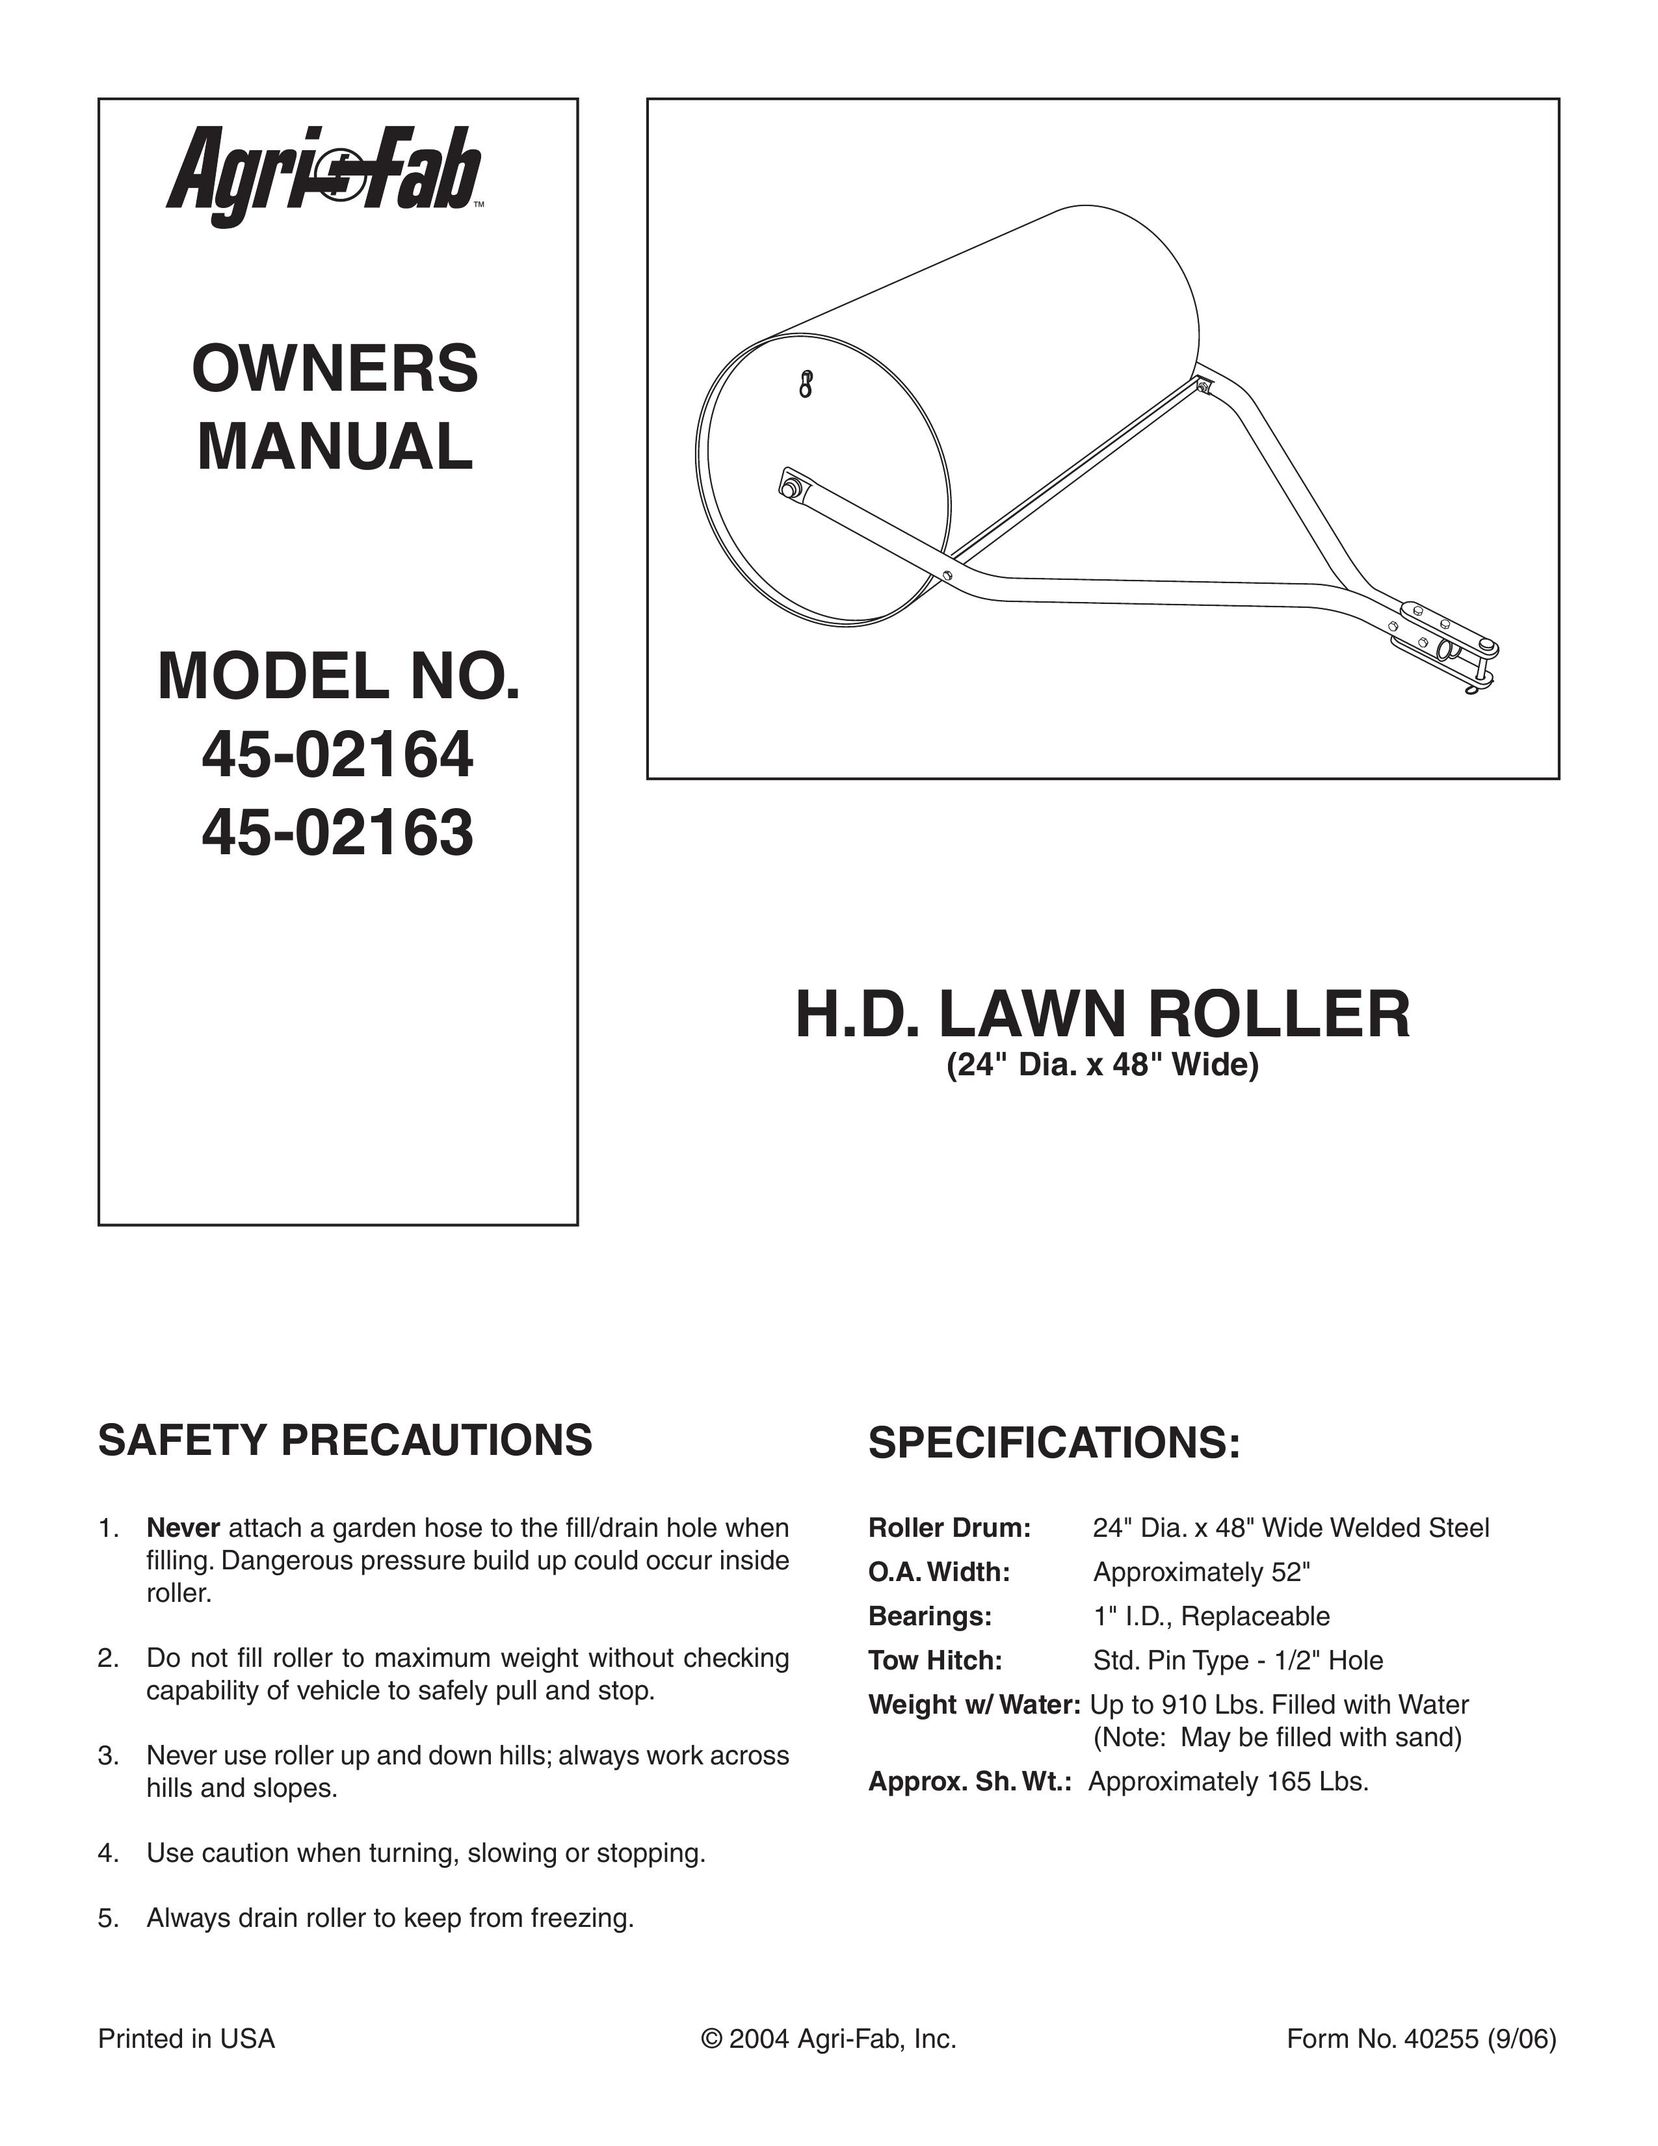 Agri-Fab 45-02164 Power Roller User Manual